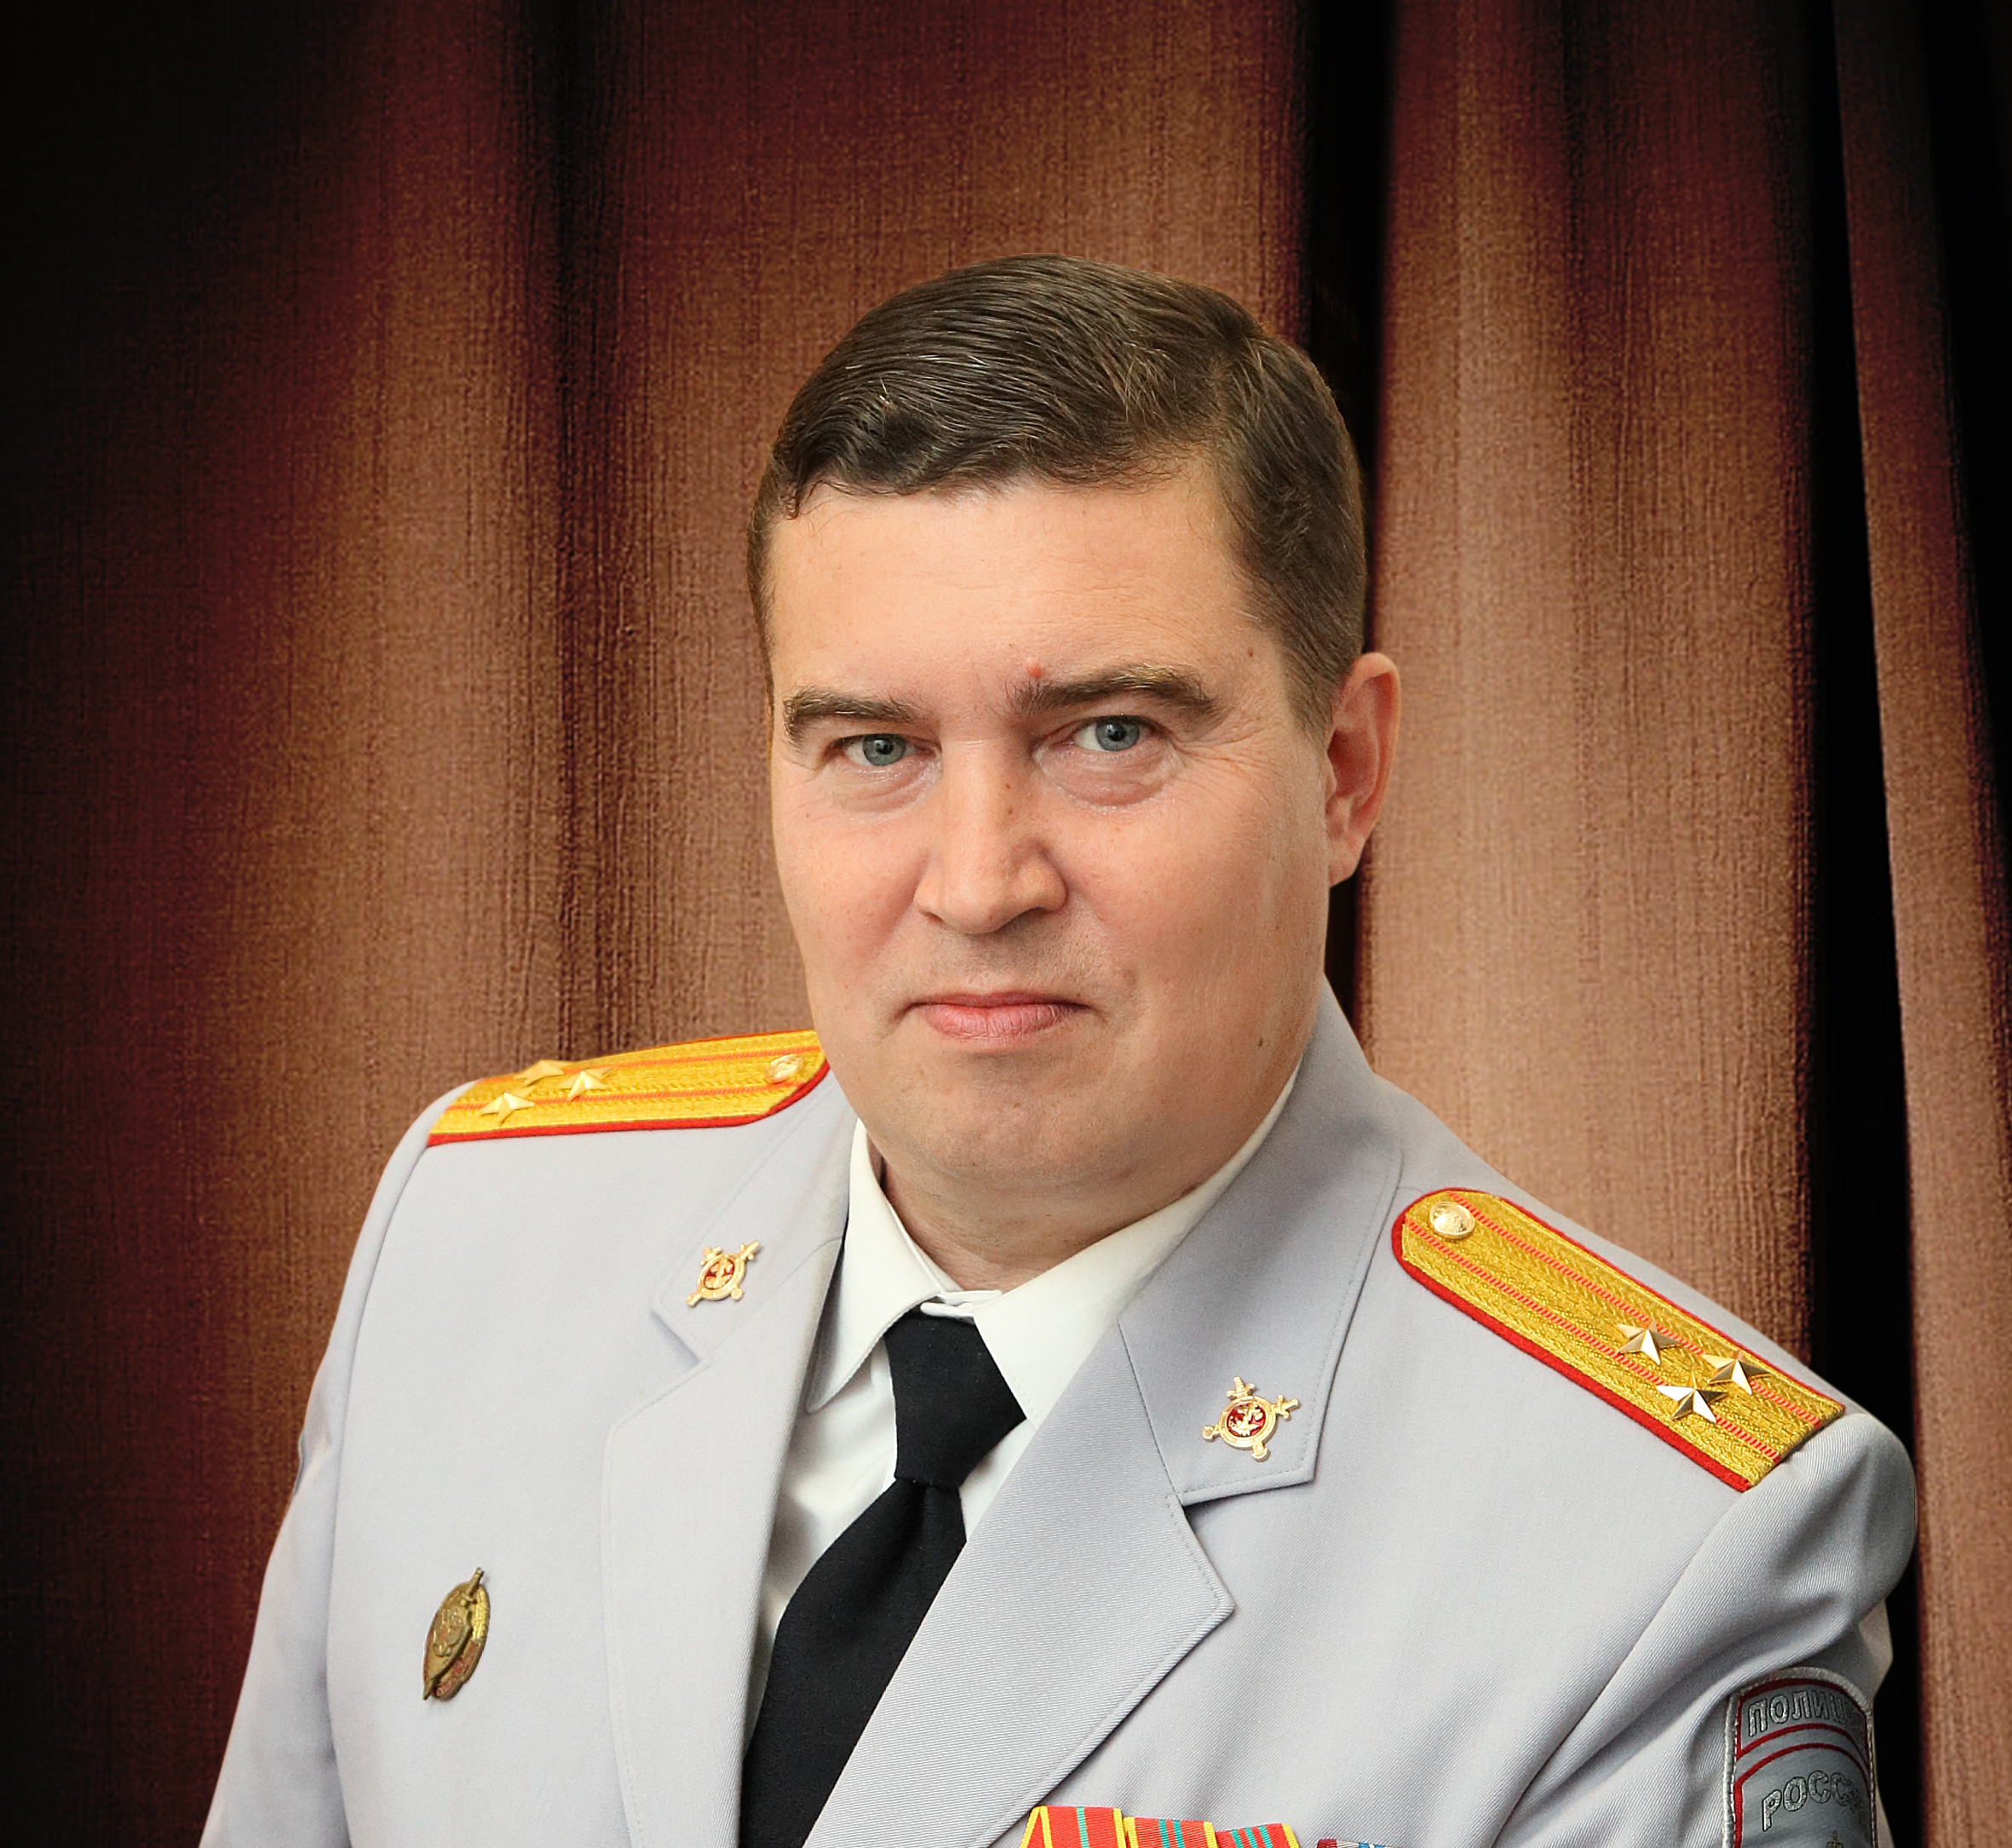                         Nikulenko Andrei
            